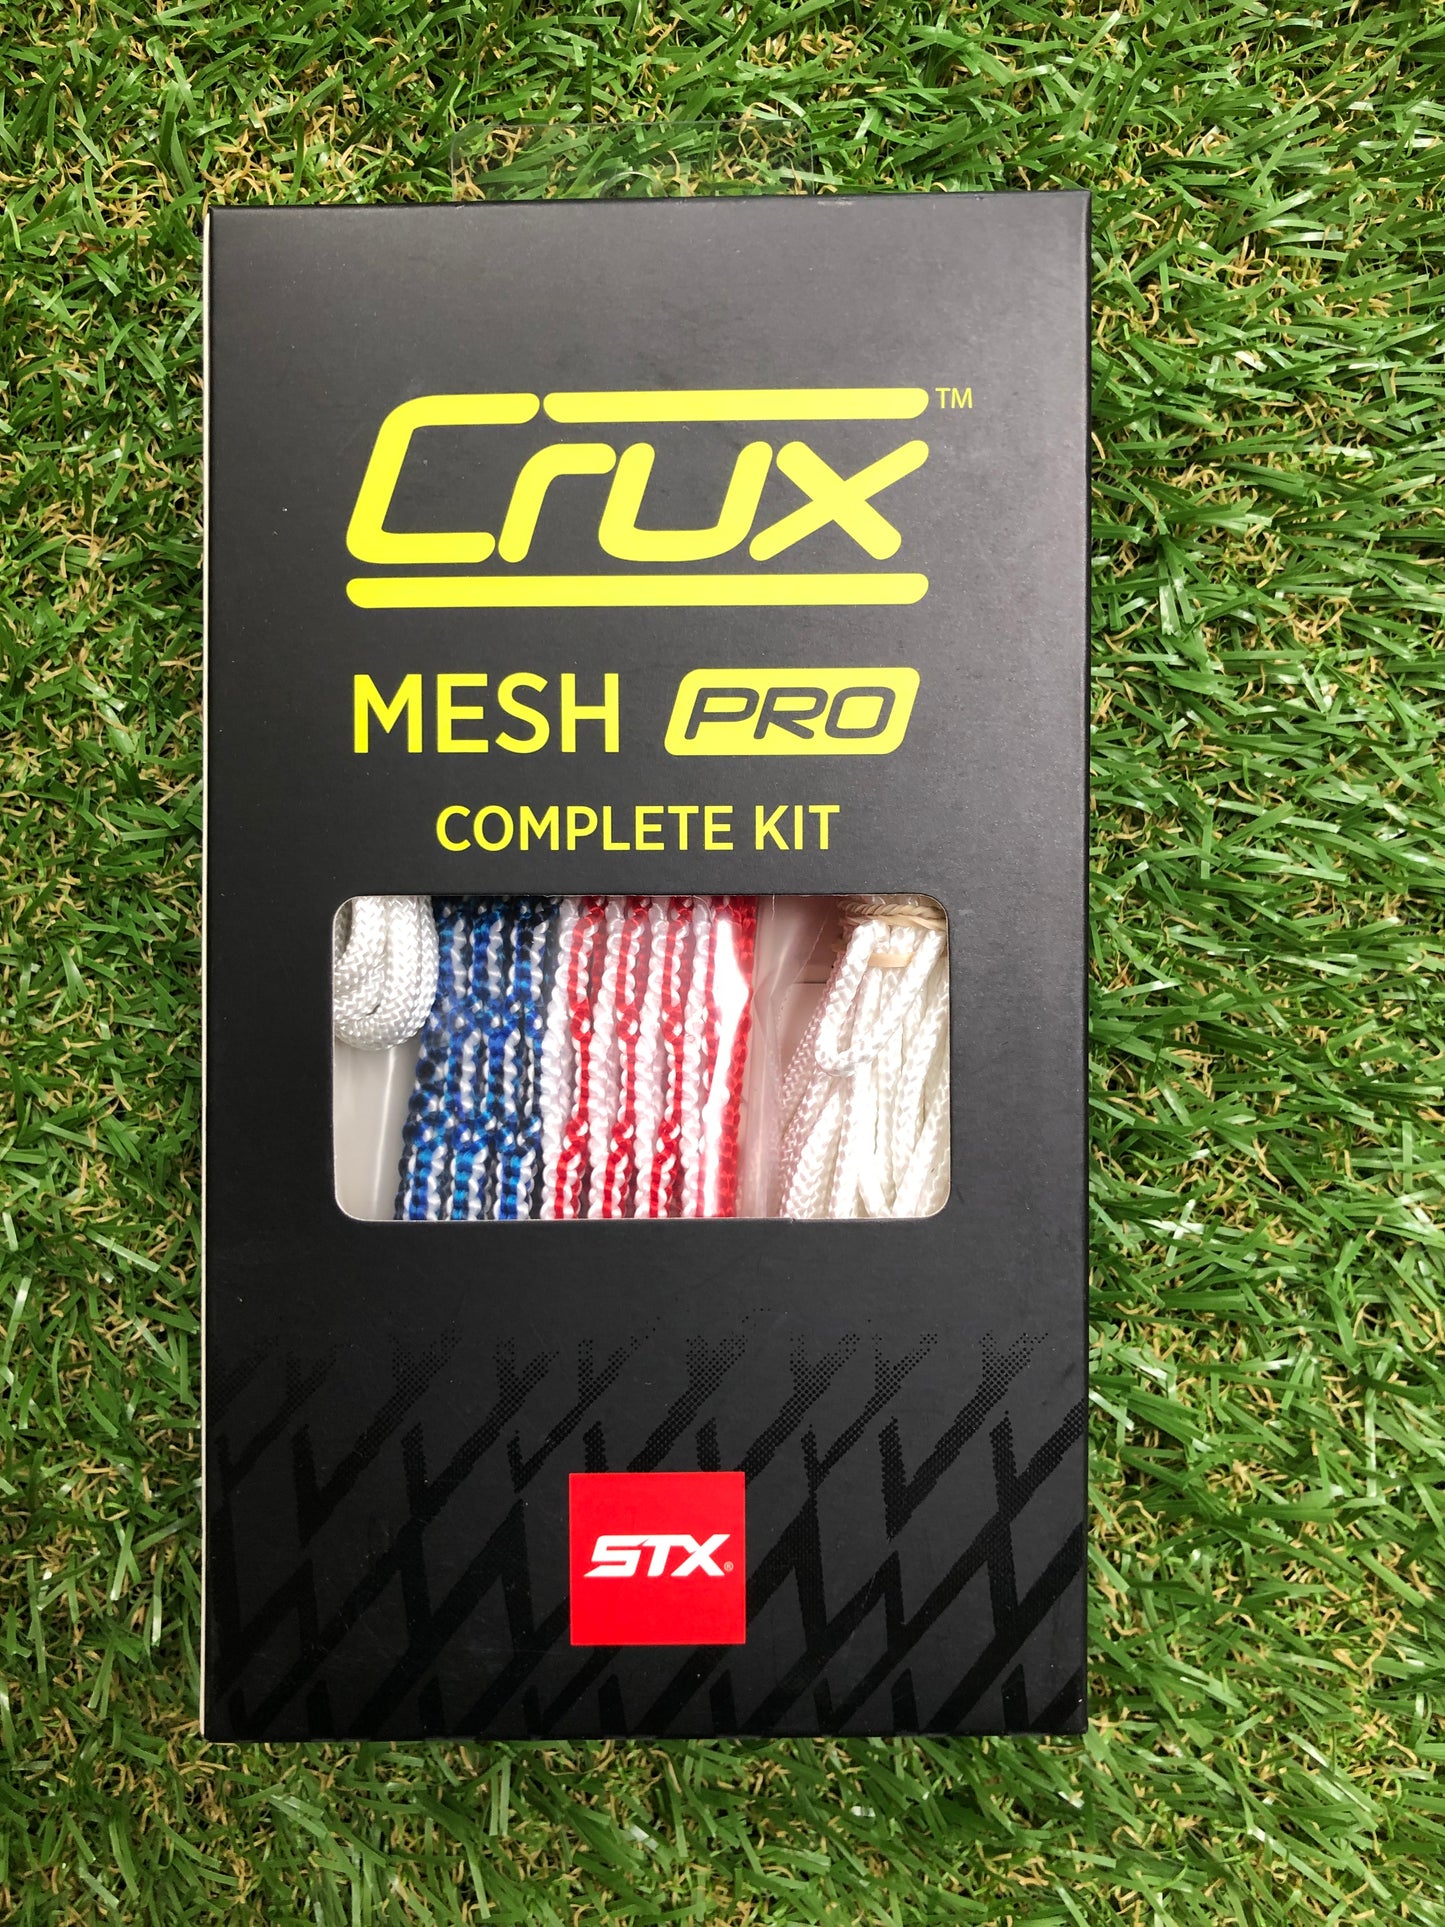 STX Crux Mesh Pro Women's Complete Stringing Kit